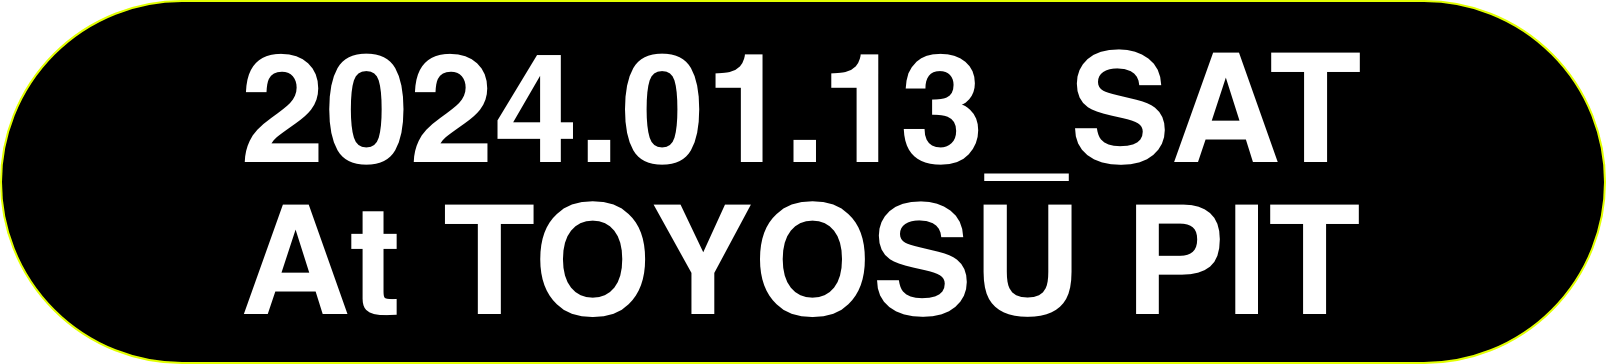 2024.01.13 SAT At TOYOSU PIT